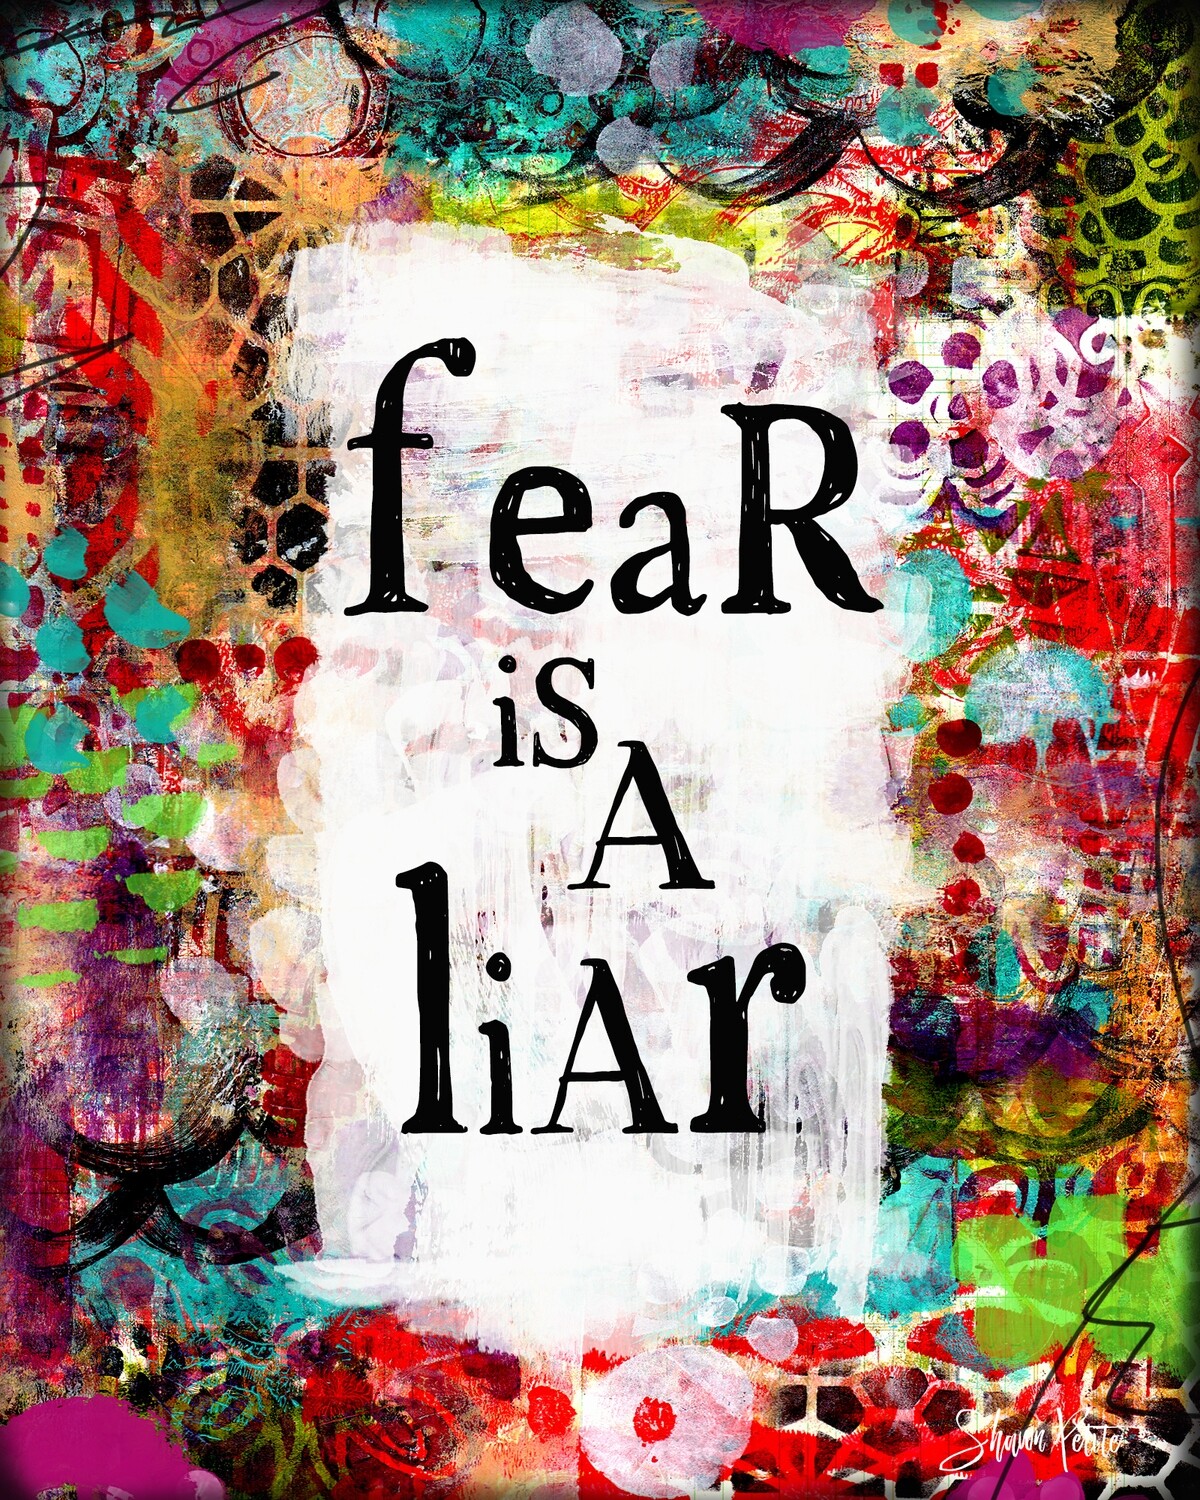 "Fear is a liar" digital instant download